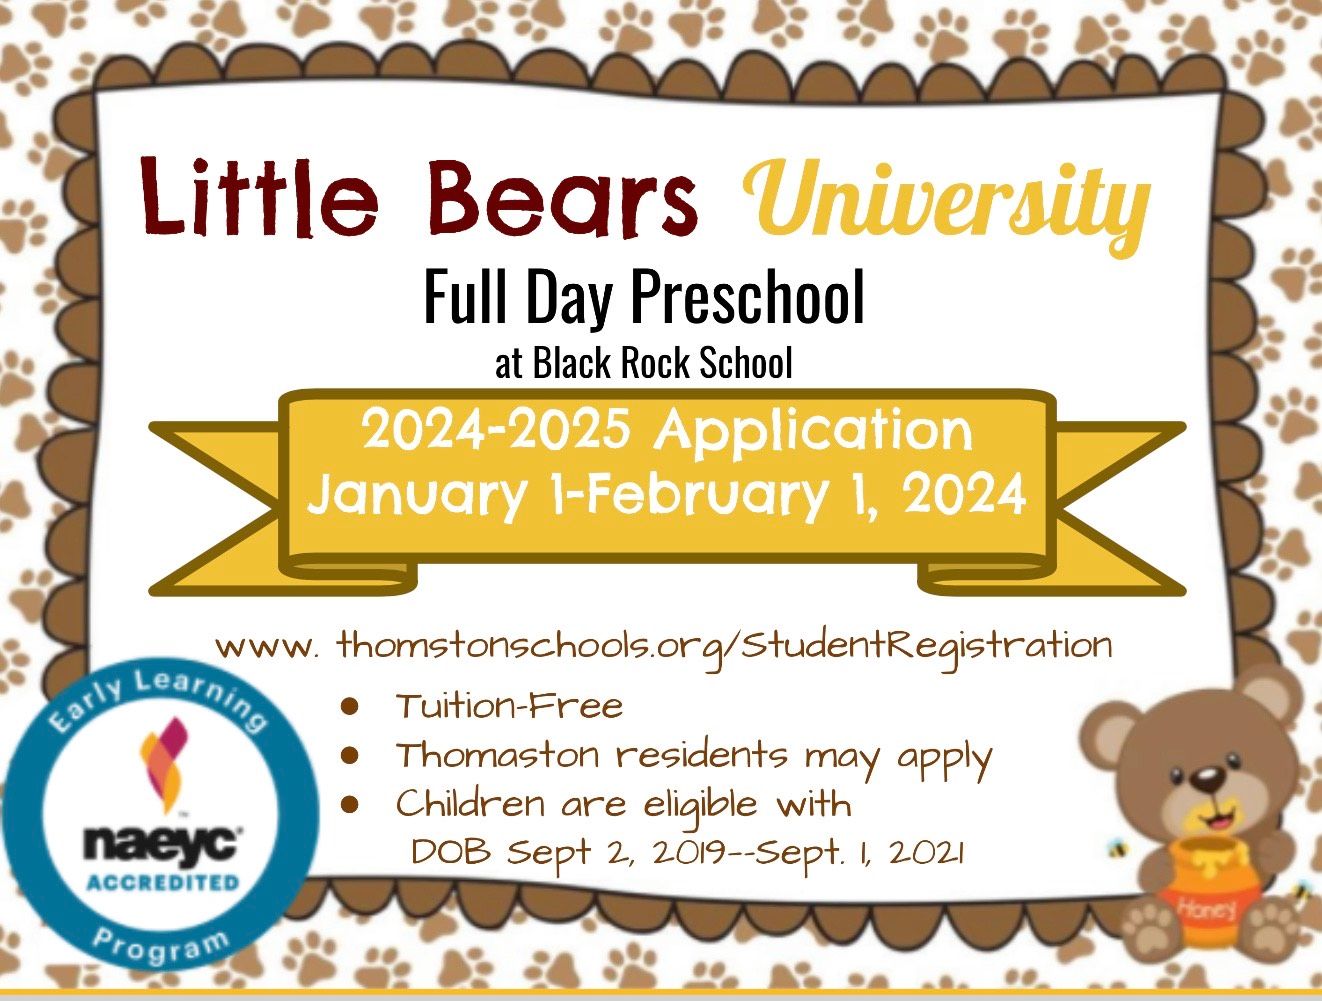 An advertisement for little bears university full day preschool